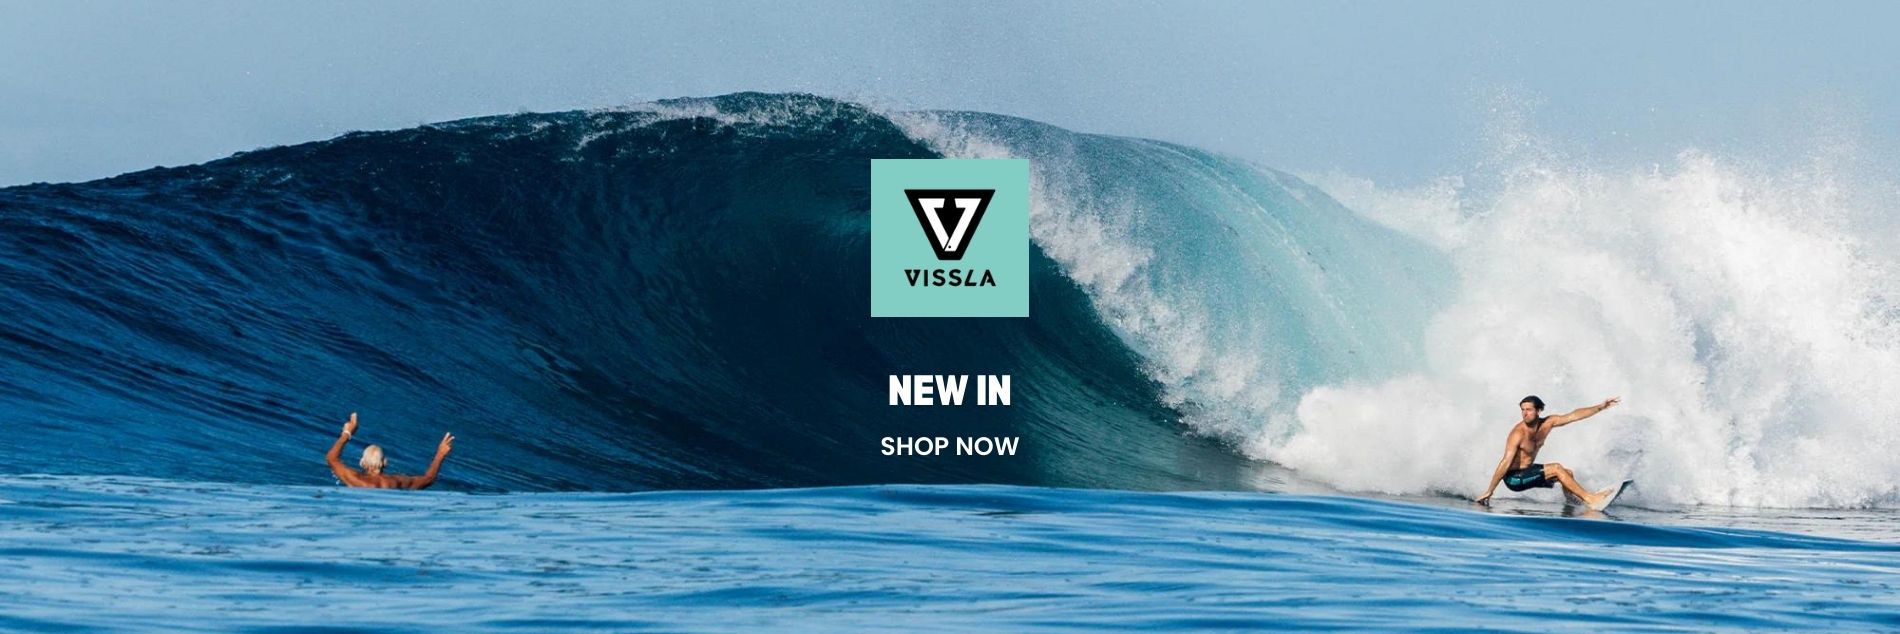 vissla surf new collection shop online europe